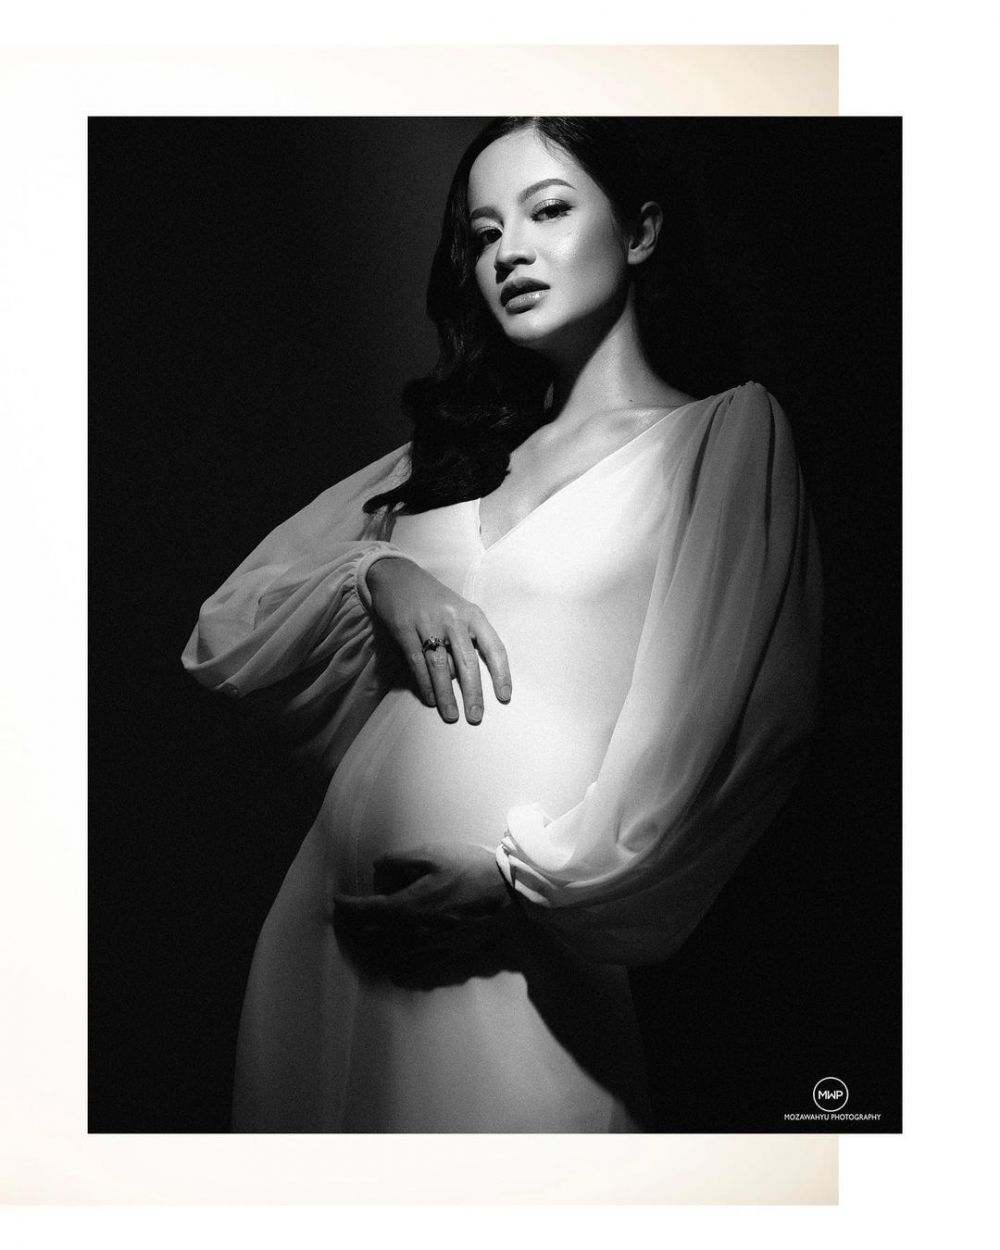 Hamil anak pertama, ini 8 potret maternity shoot Ovi Dian